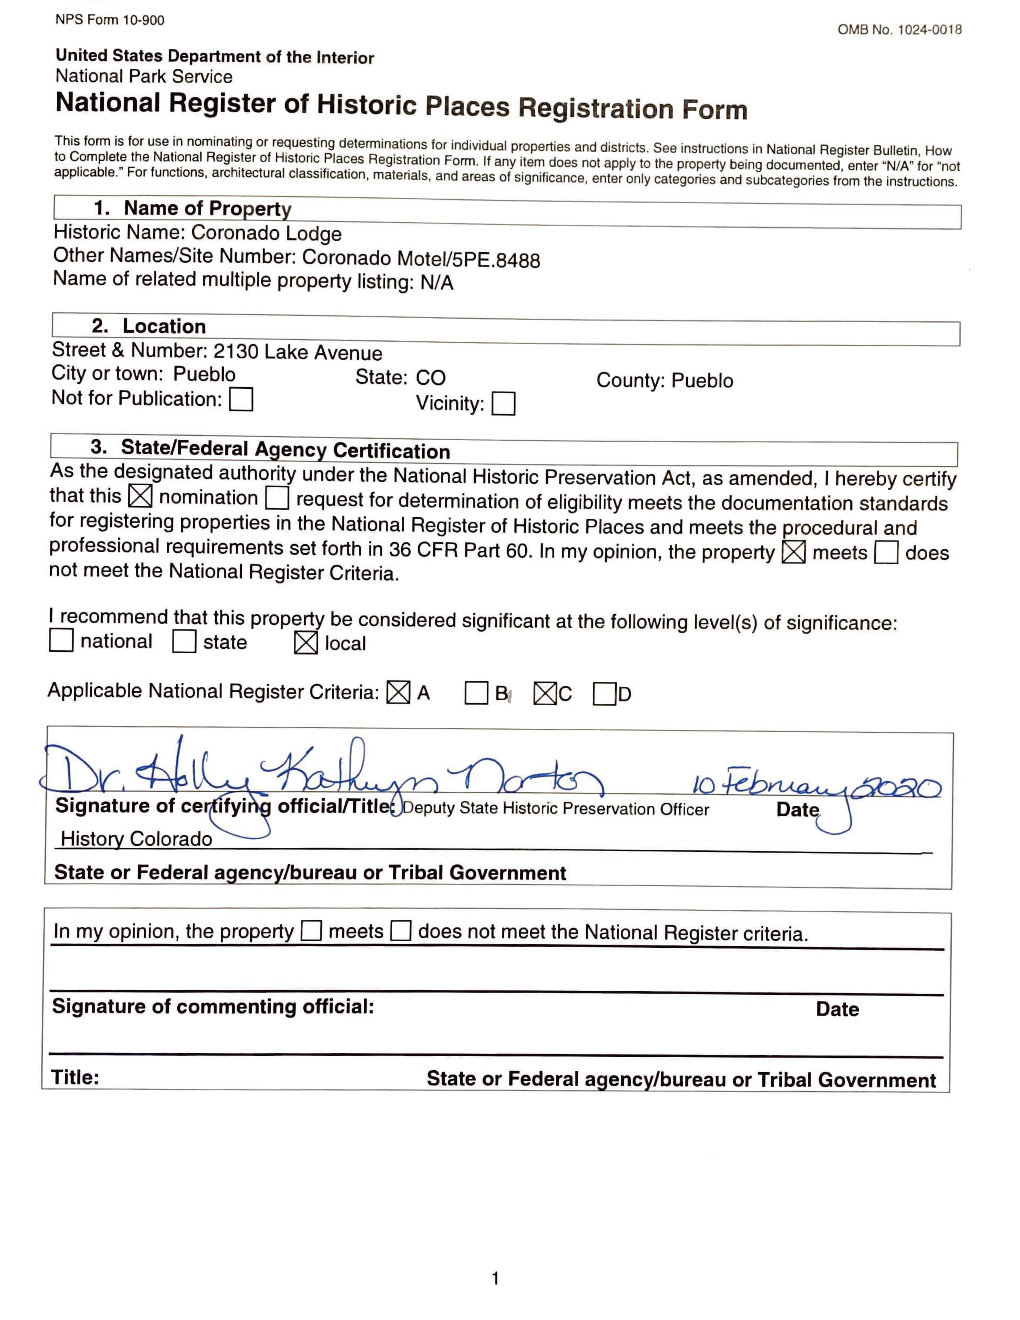 Coronado Lodge National Register Nomination, 5PE